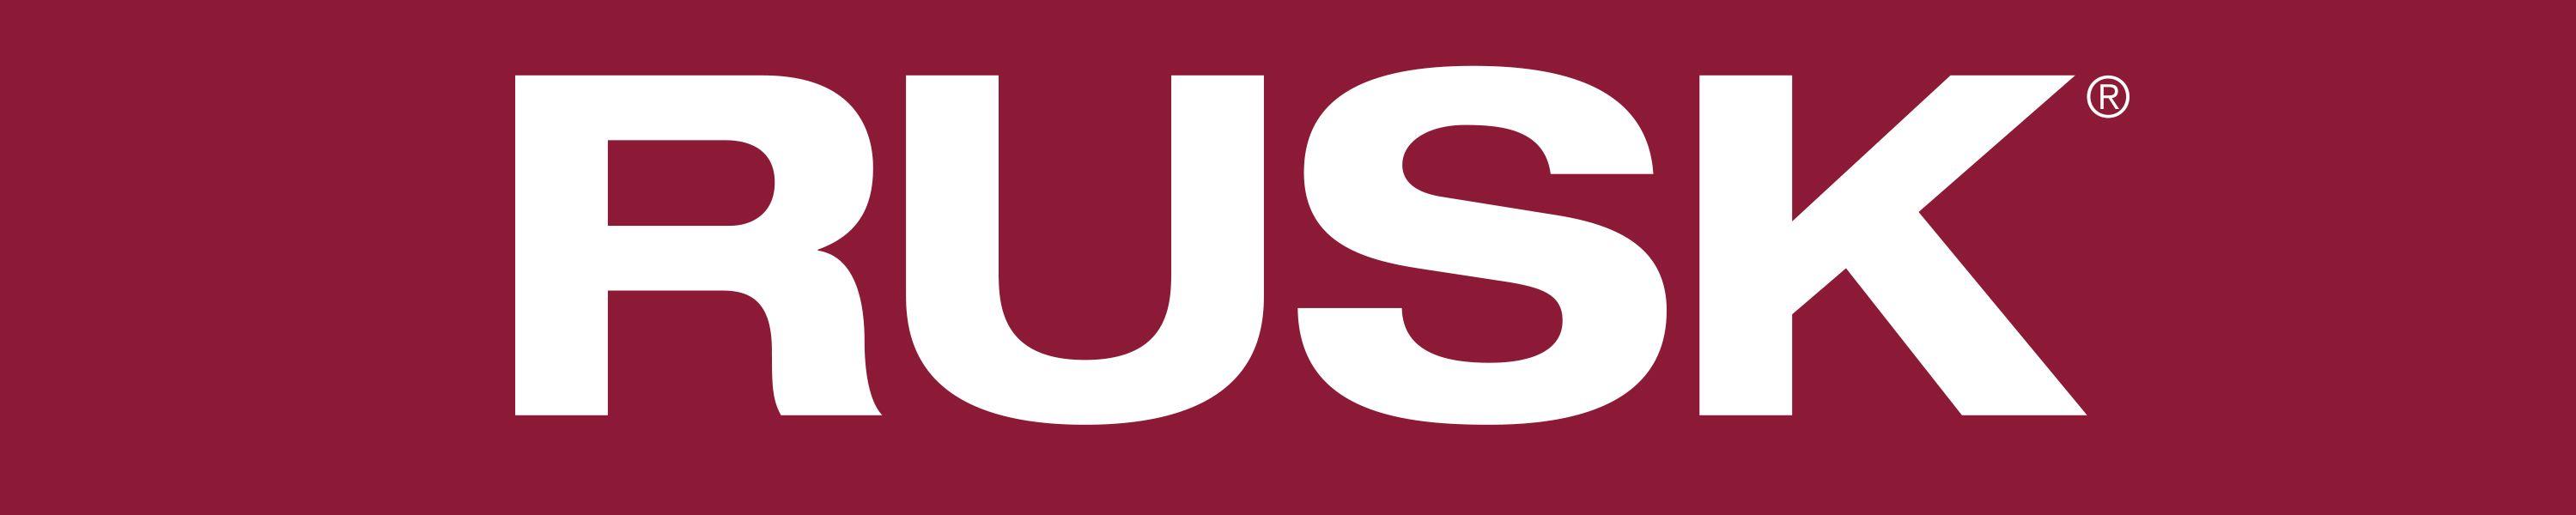 Rusk Logo - Amazon.com: RUSK